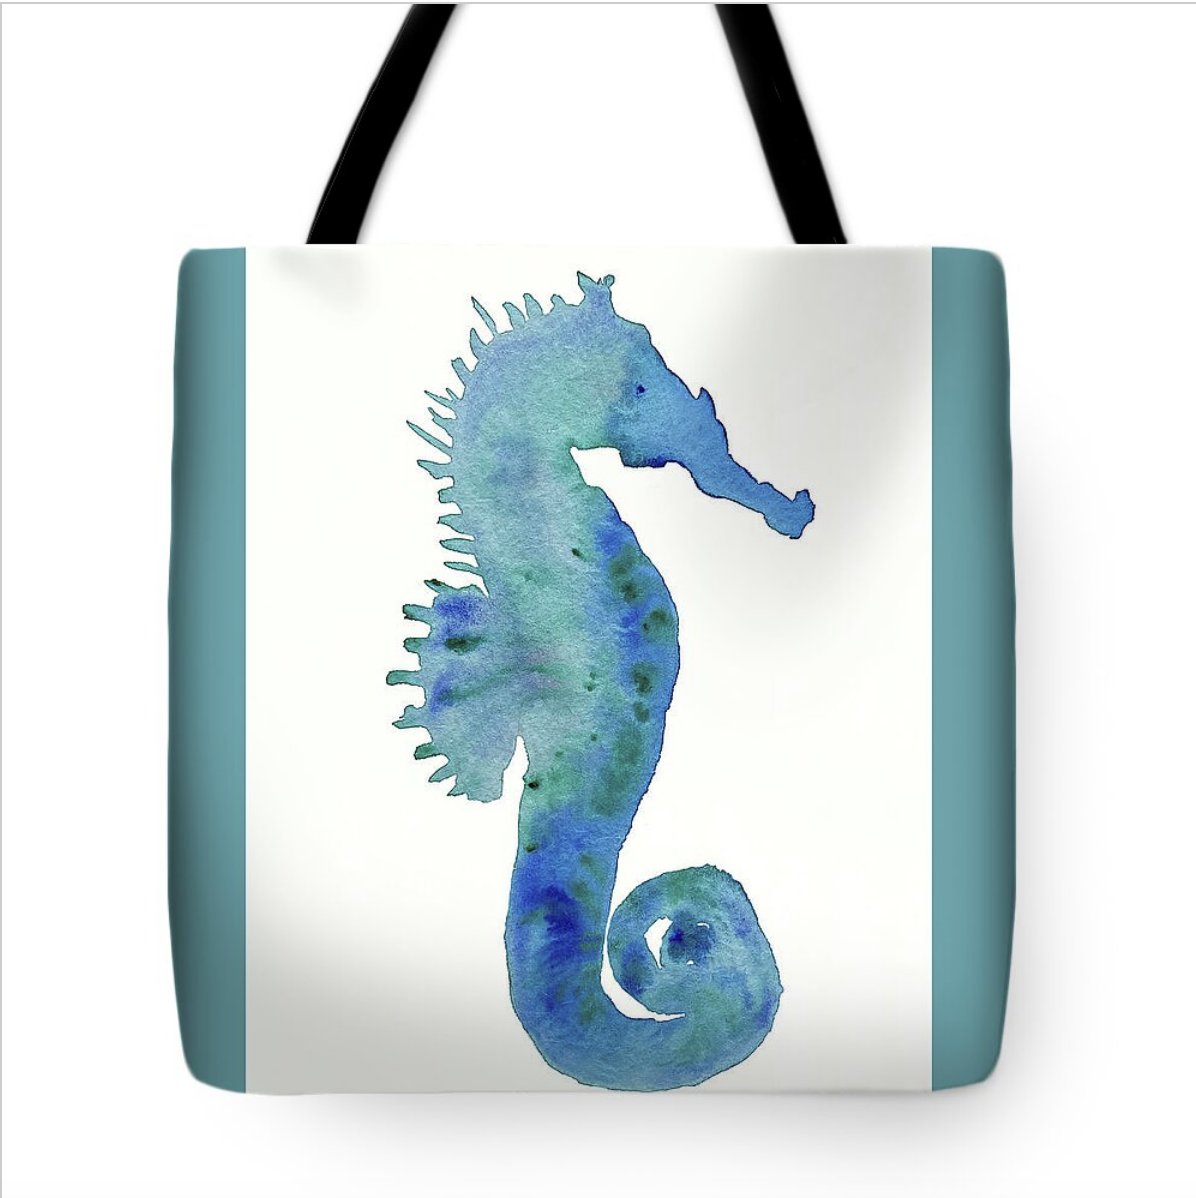 #seahorse #sealife #buyintoart #watercolor #watercolorpainting #homedecor #wallart #coastallife #AYearForArt #coastal #tropical #fillthatemptywall #totebag #showercurtain #pillows #interiordesign #phonecase #mugs #bags #giftideas #seacreatures #art ART - deborah-league.pixels.com/featured/spiny…